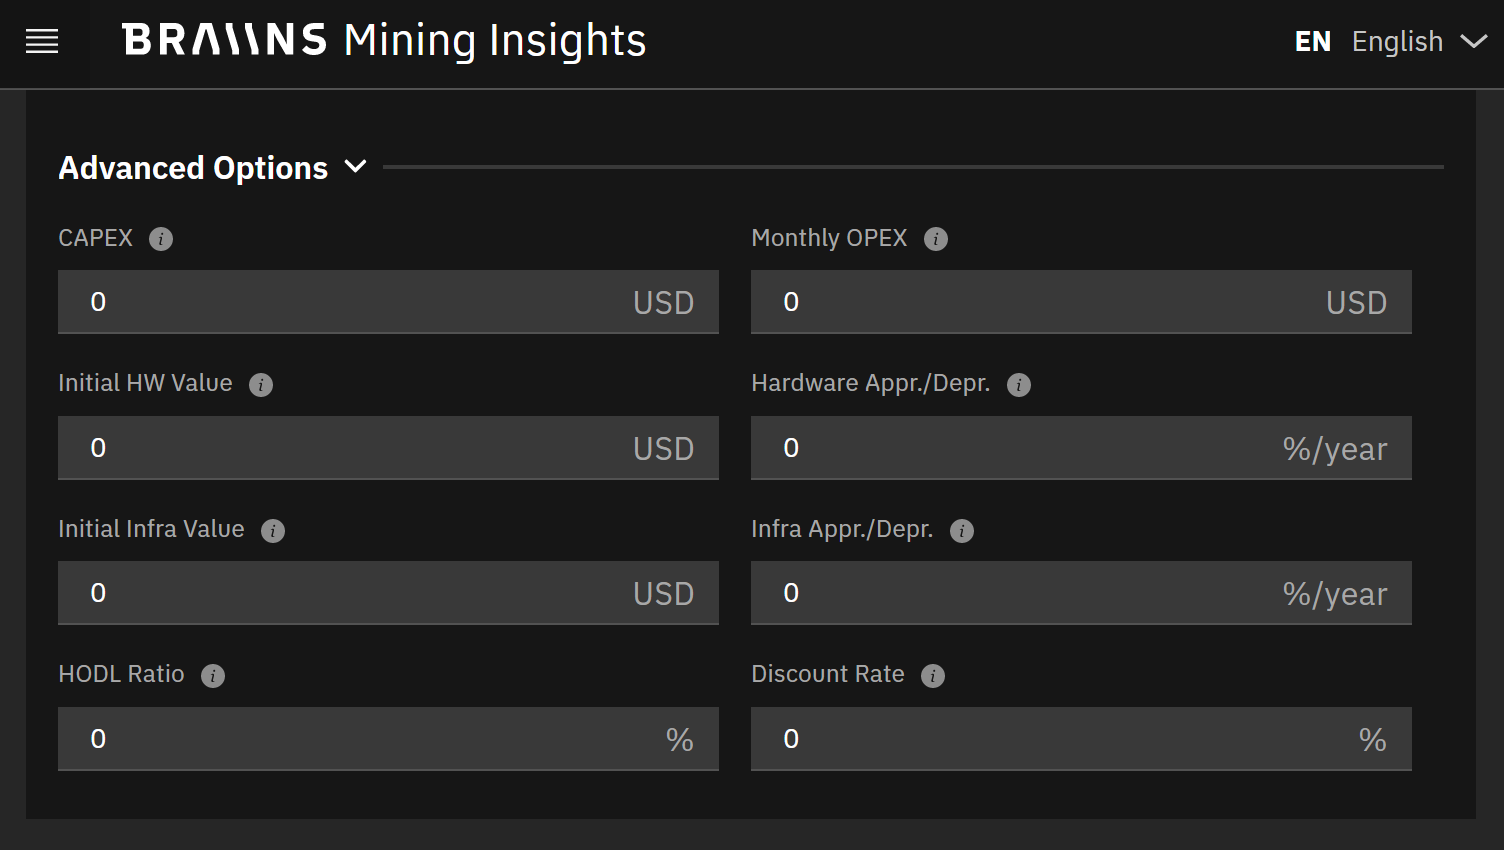 AMD Radeon RX Vega 64 mining profit calculator - WhatToMine